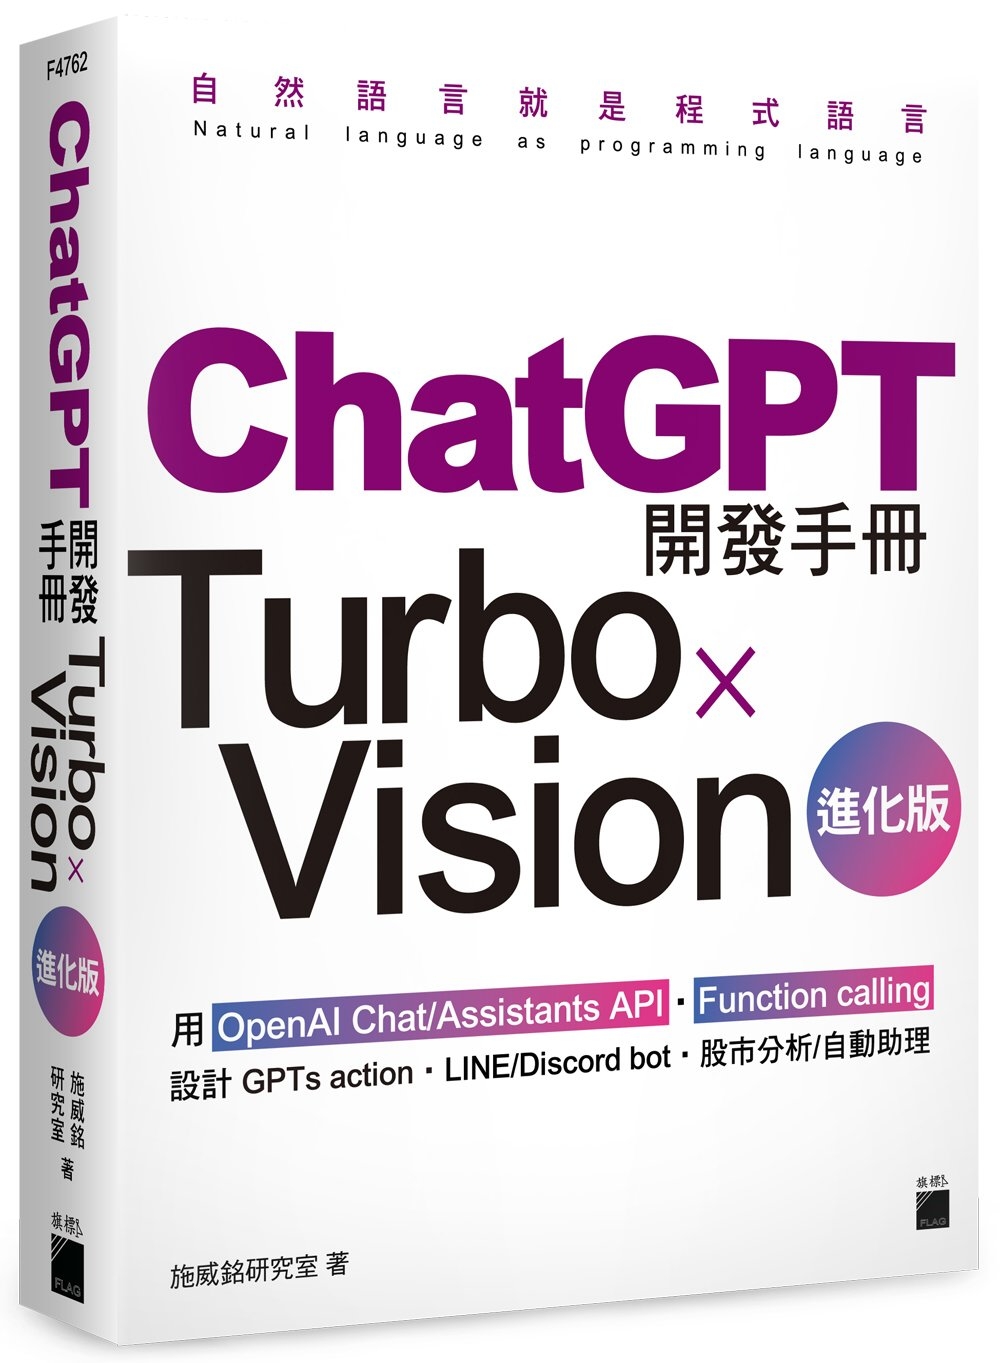 ChatGPT 開發手冊 Turbo×Vision 進化版：用 OpenAI Chat/Assistants API‧Function calling 設計 GPTs action‧LINE/Discord bot‧股市分析/自動助理